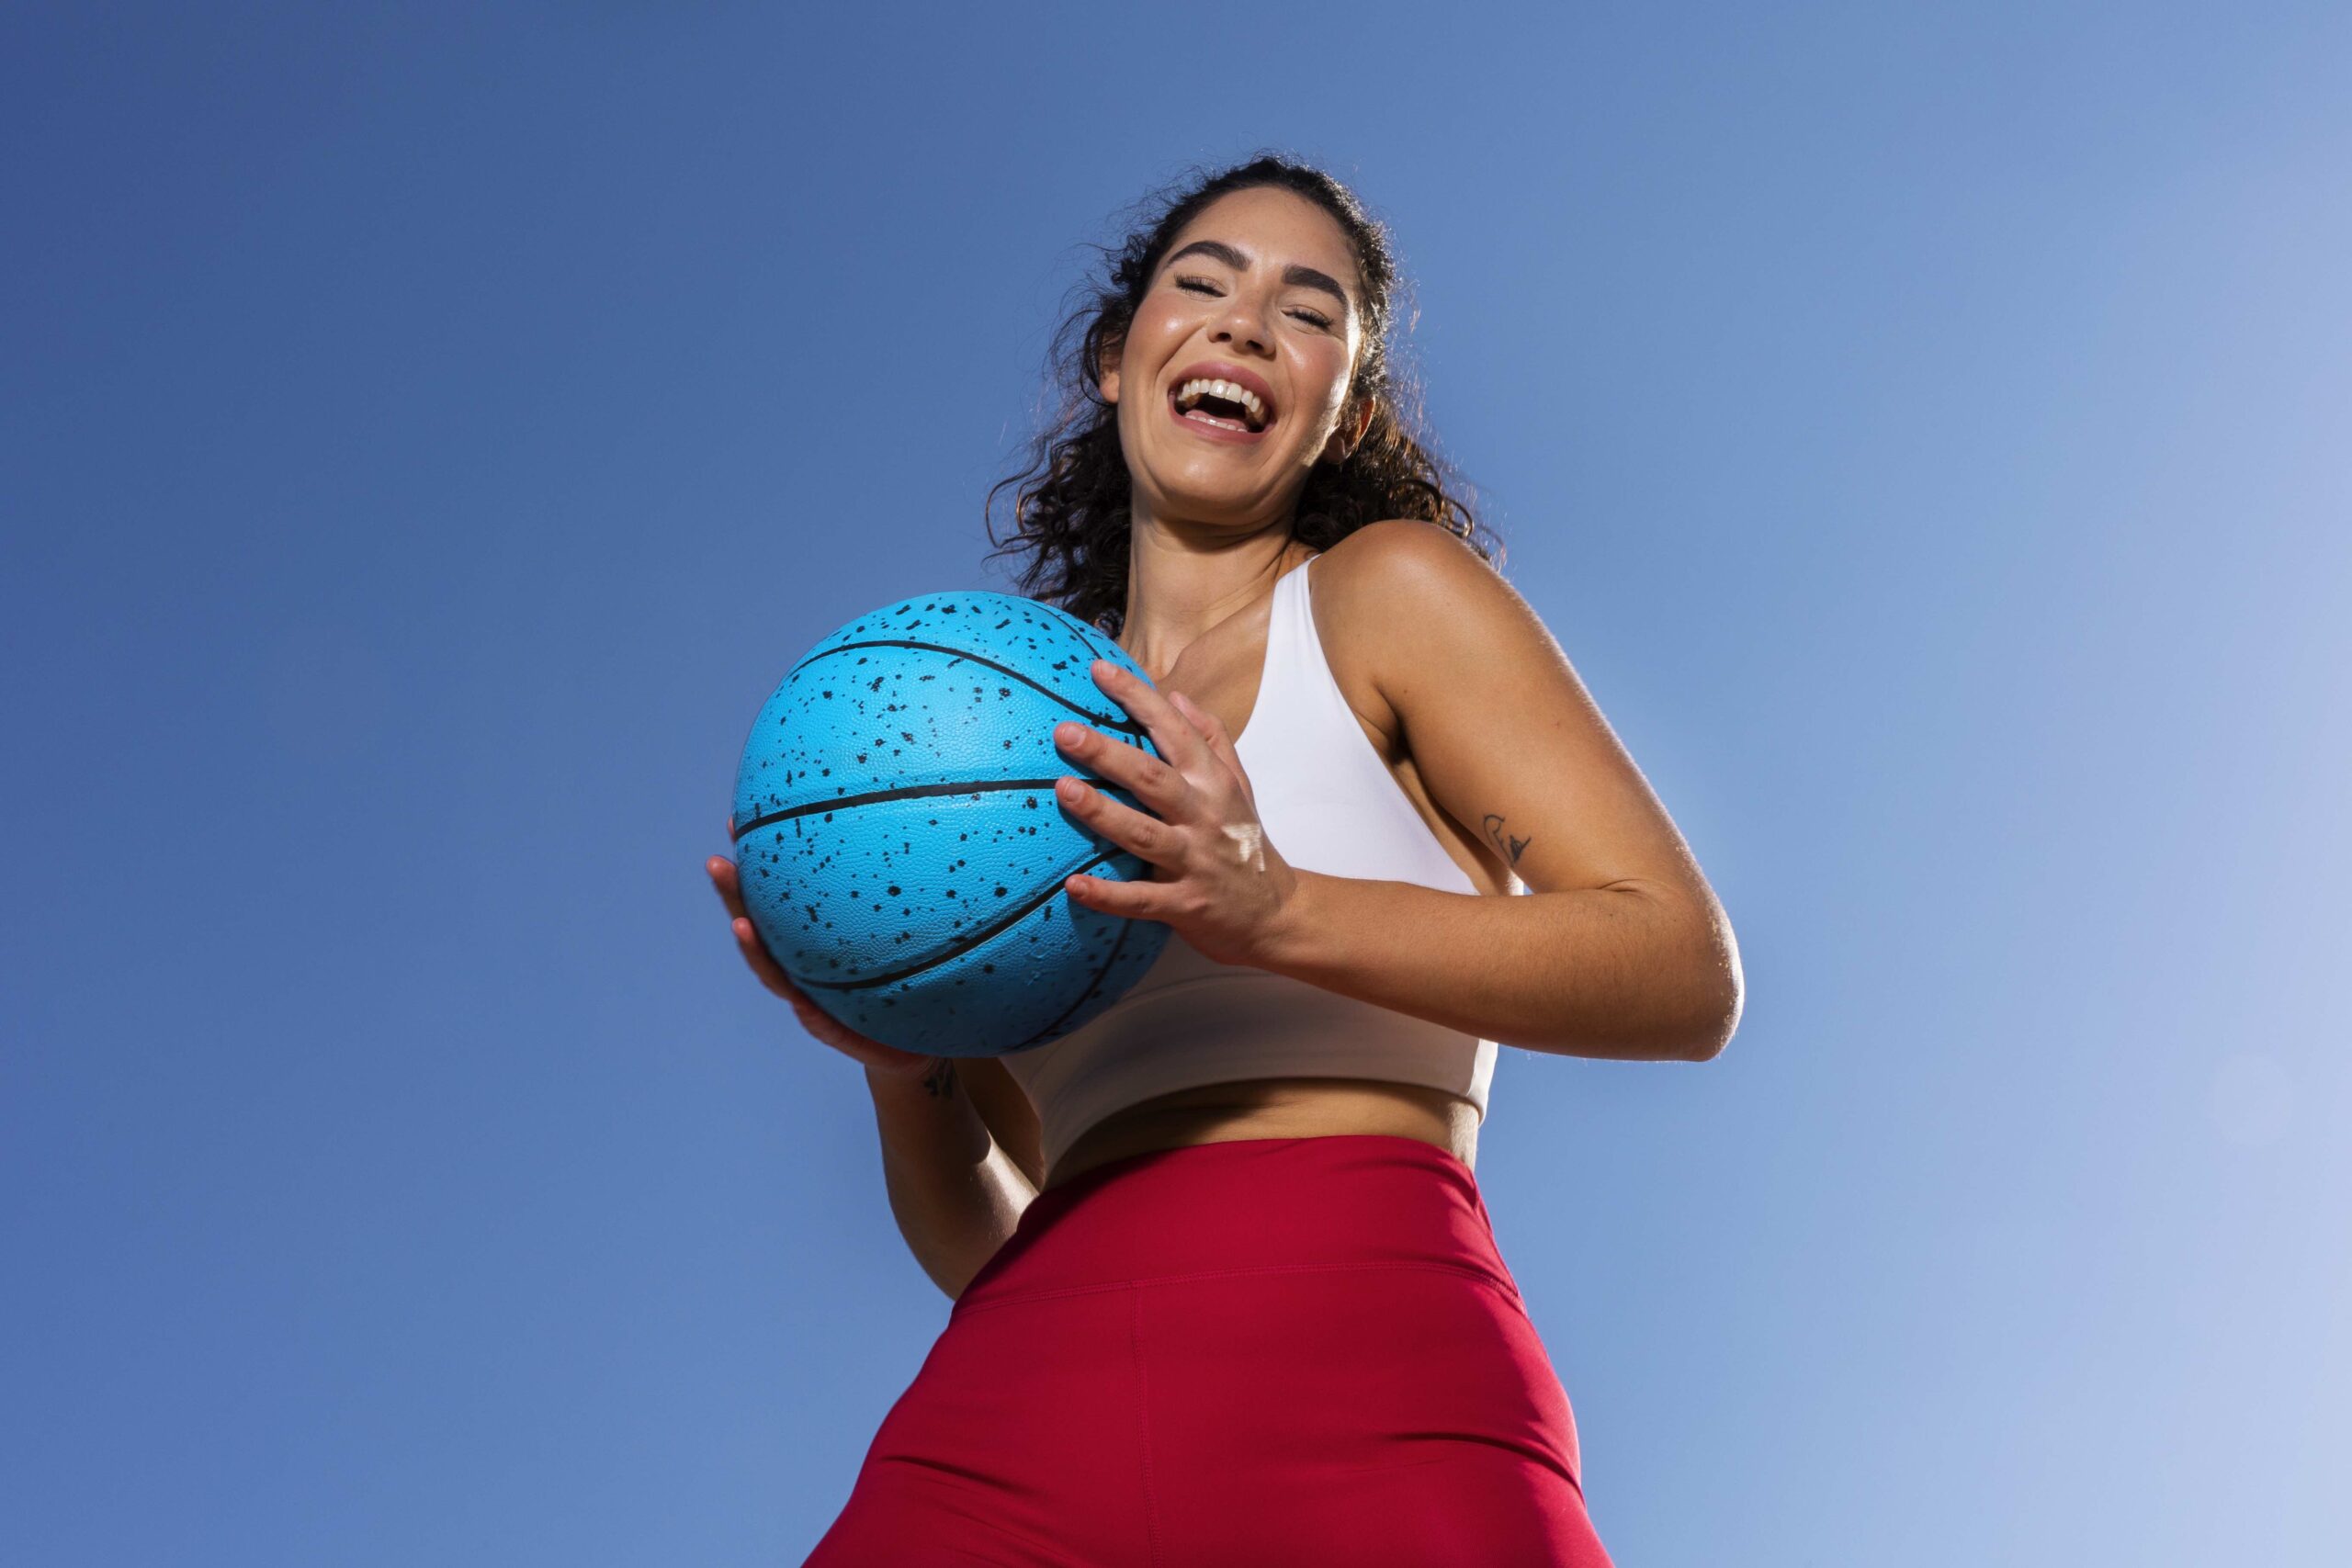 Woman athlete holding basketball